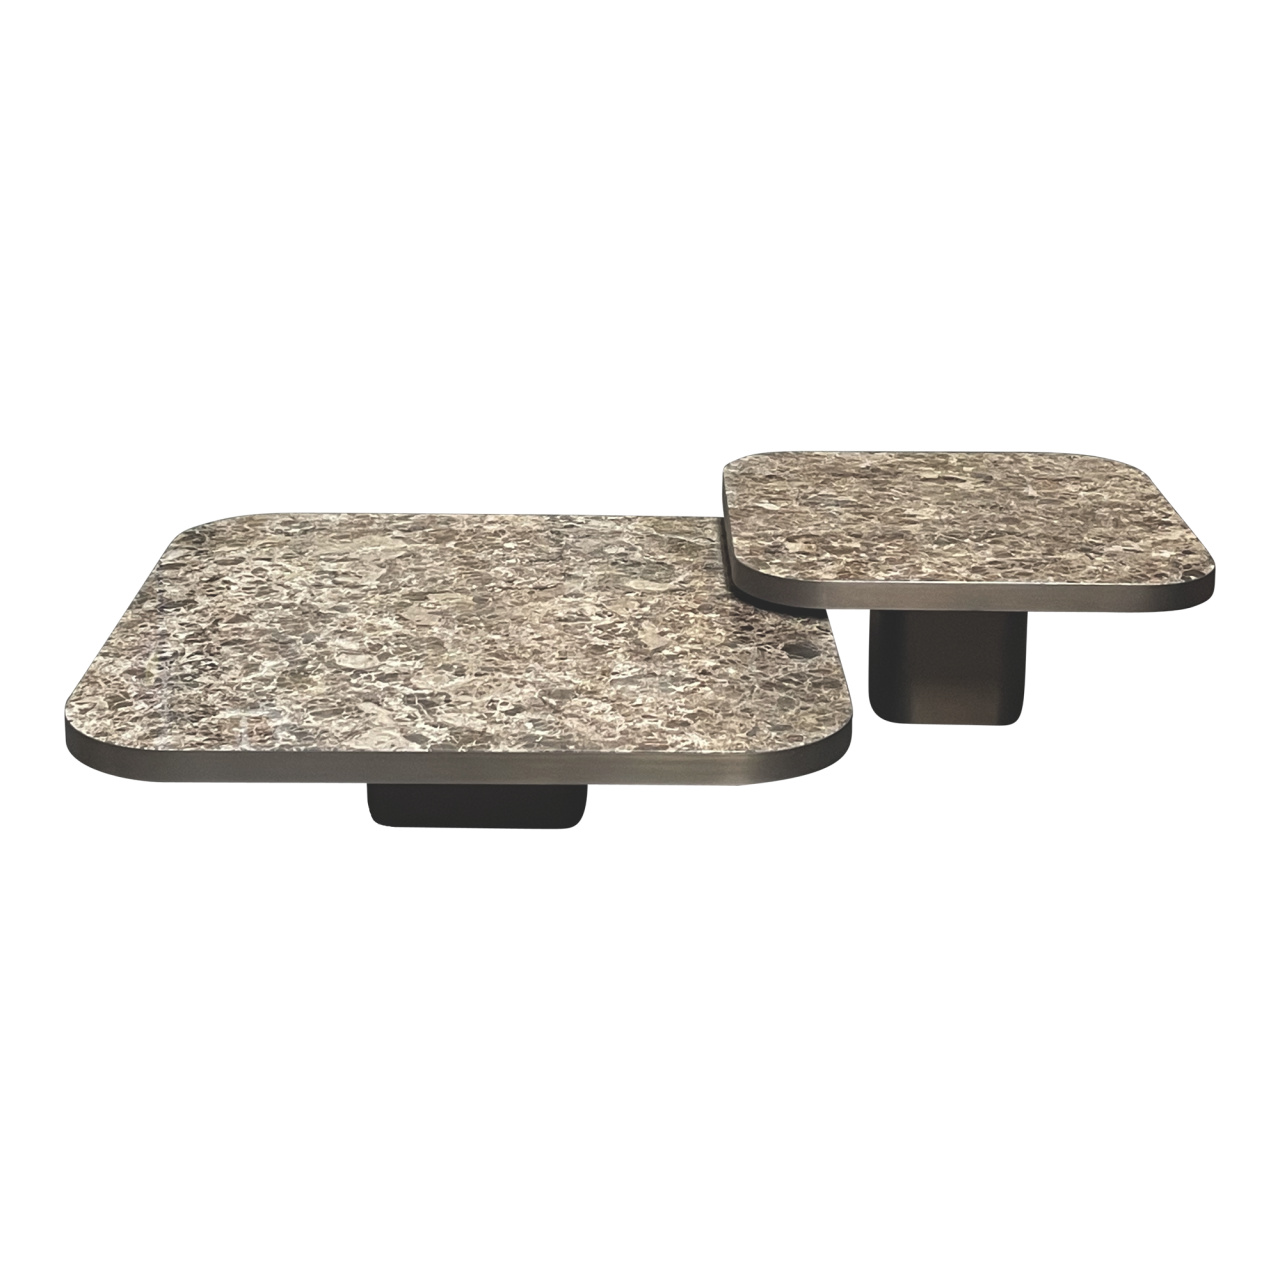 2er-Set Bow Table Couchtisch Platte Marmor Emperador Gestell Messing Brüniert